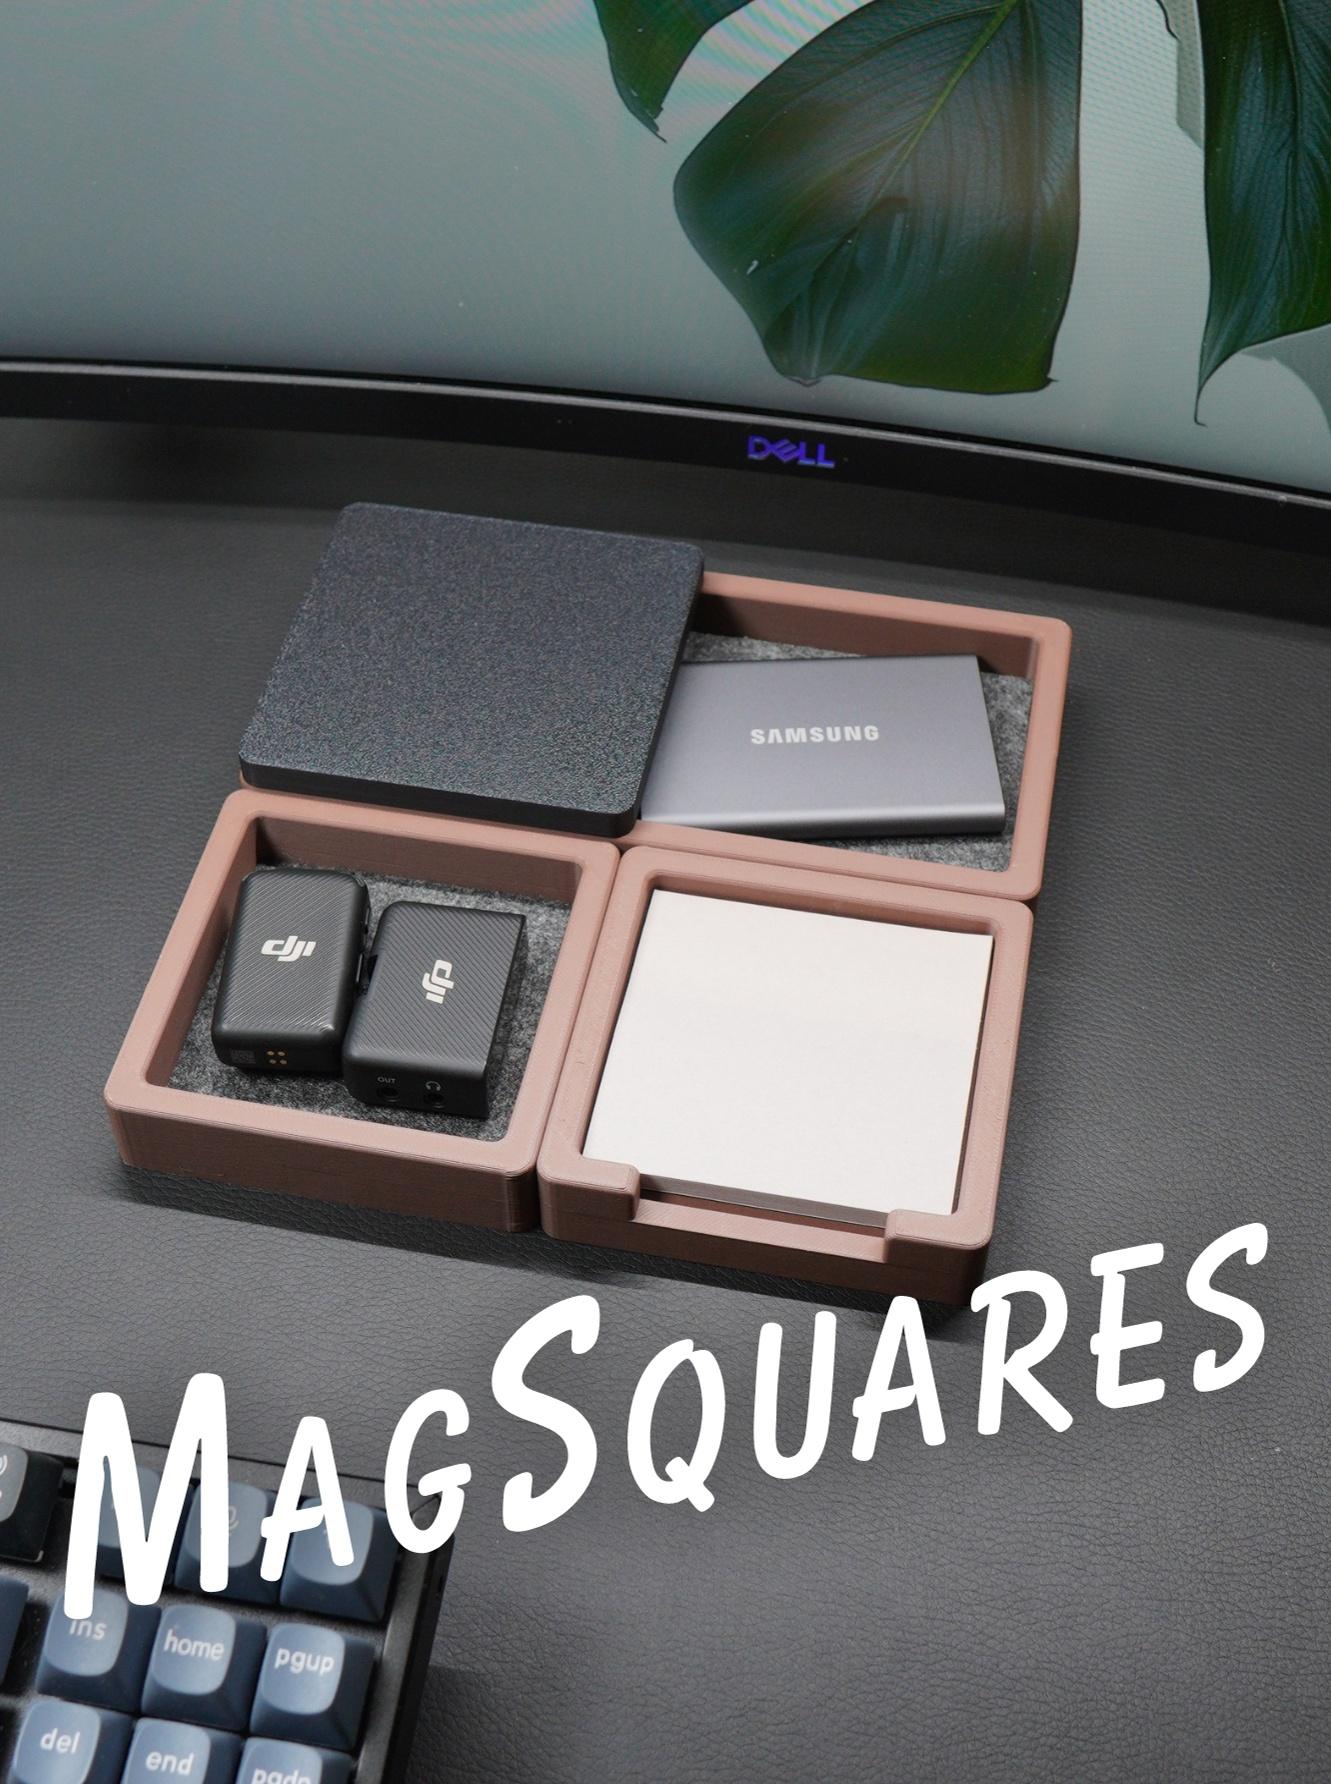 MagSquares 3d model